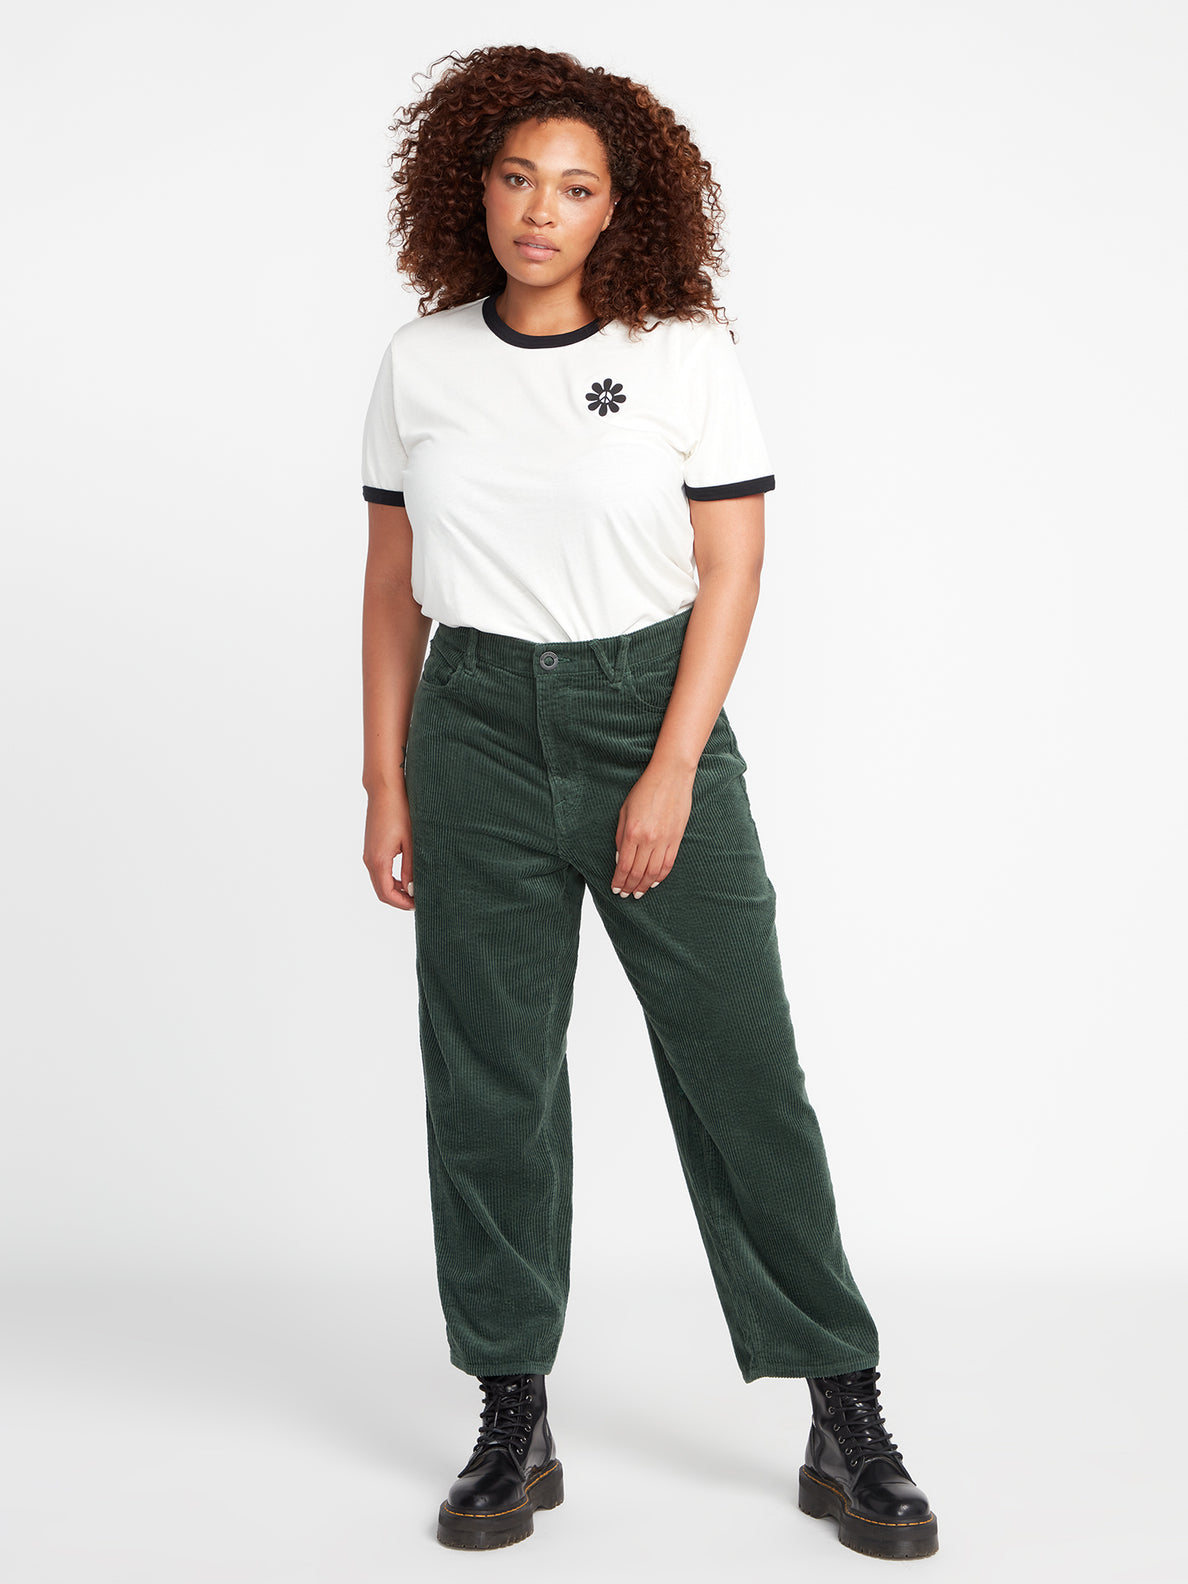 Women’s Dark Green corduroy pants. Size 27.